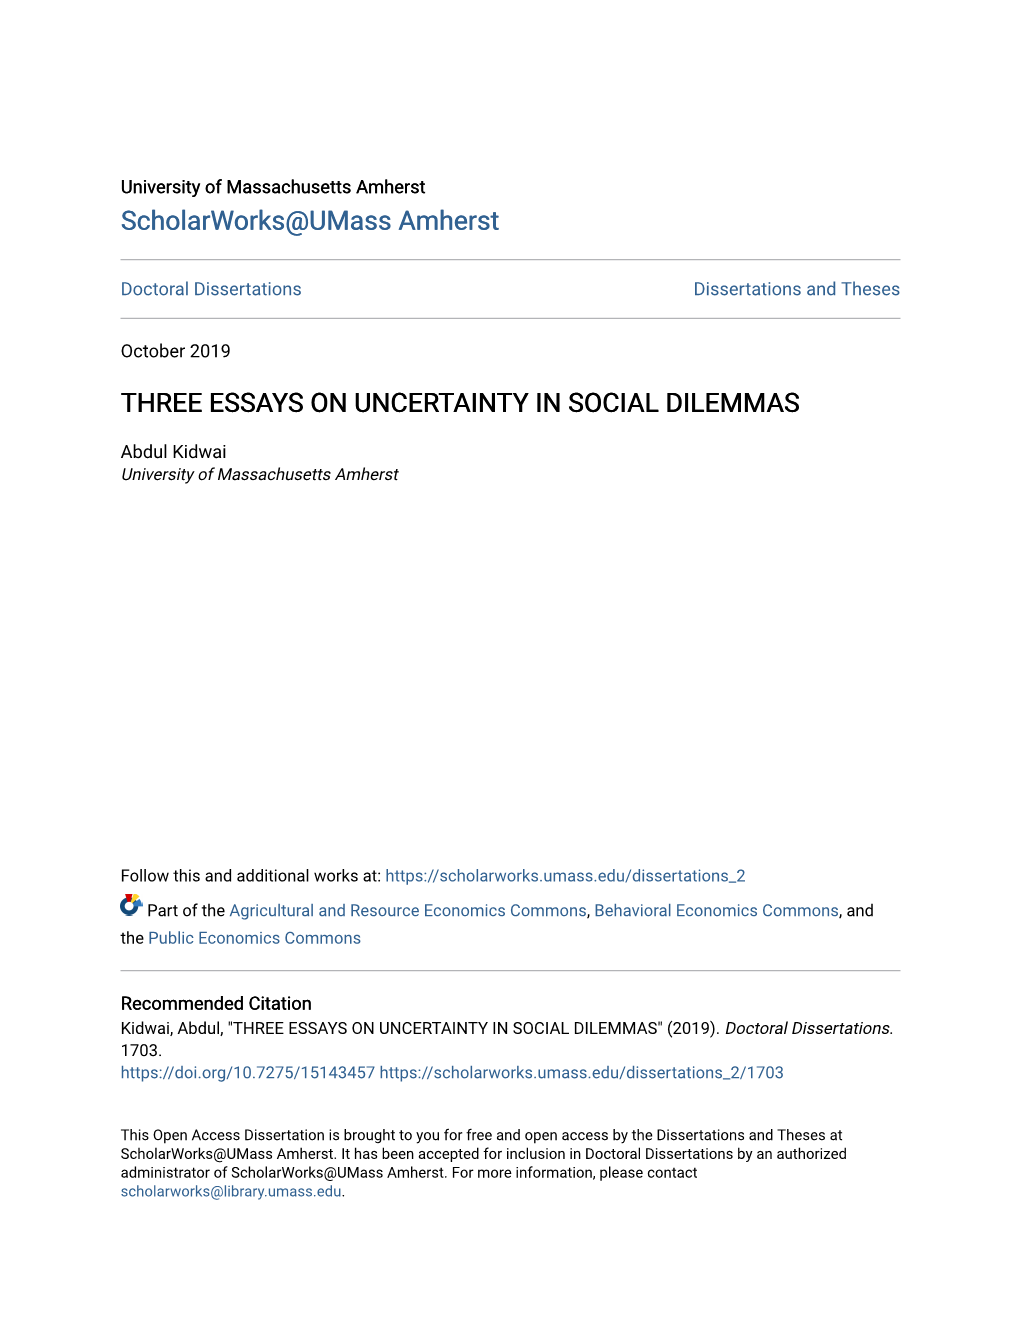 Three Essays on Uncertainty in Social Dilemmas